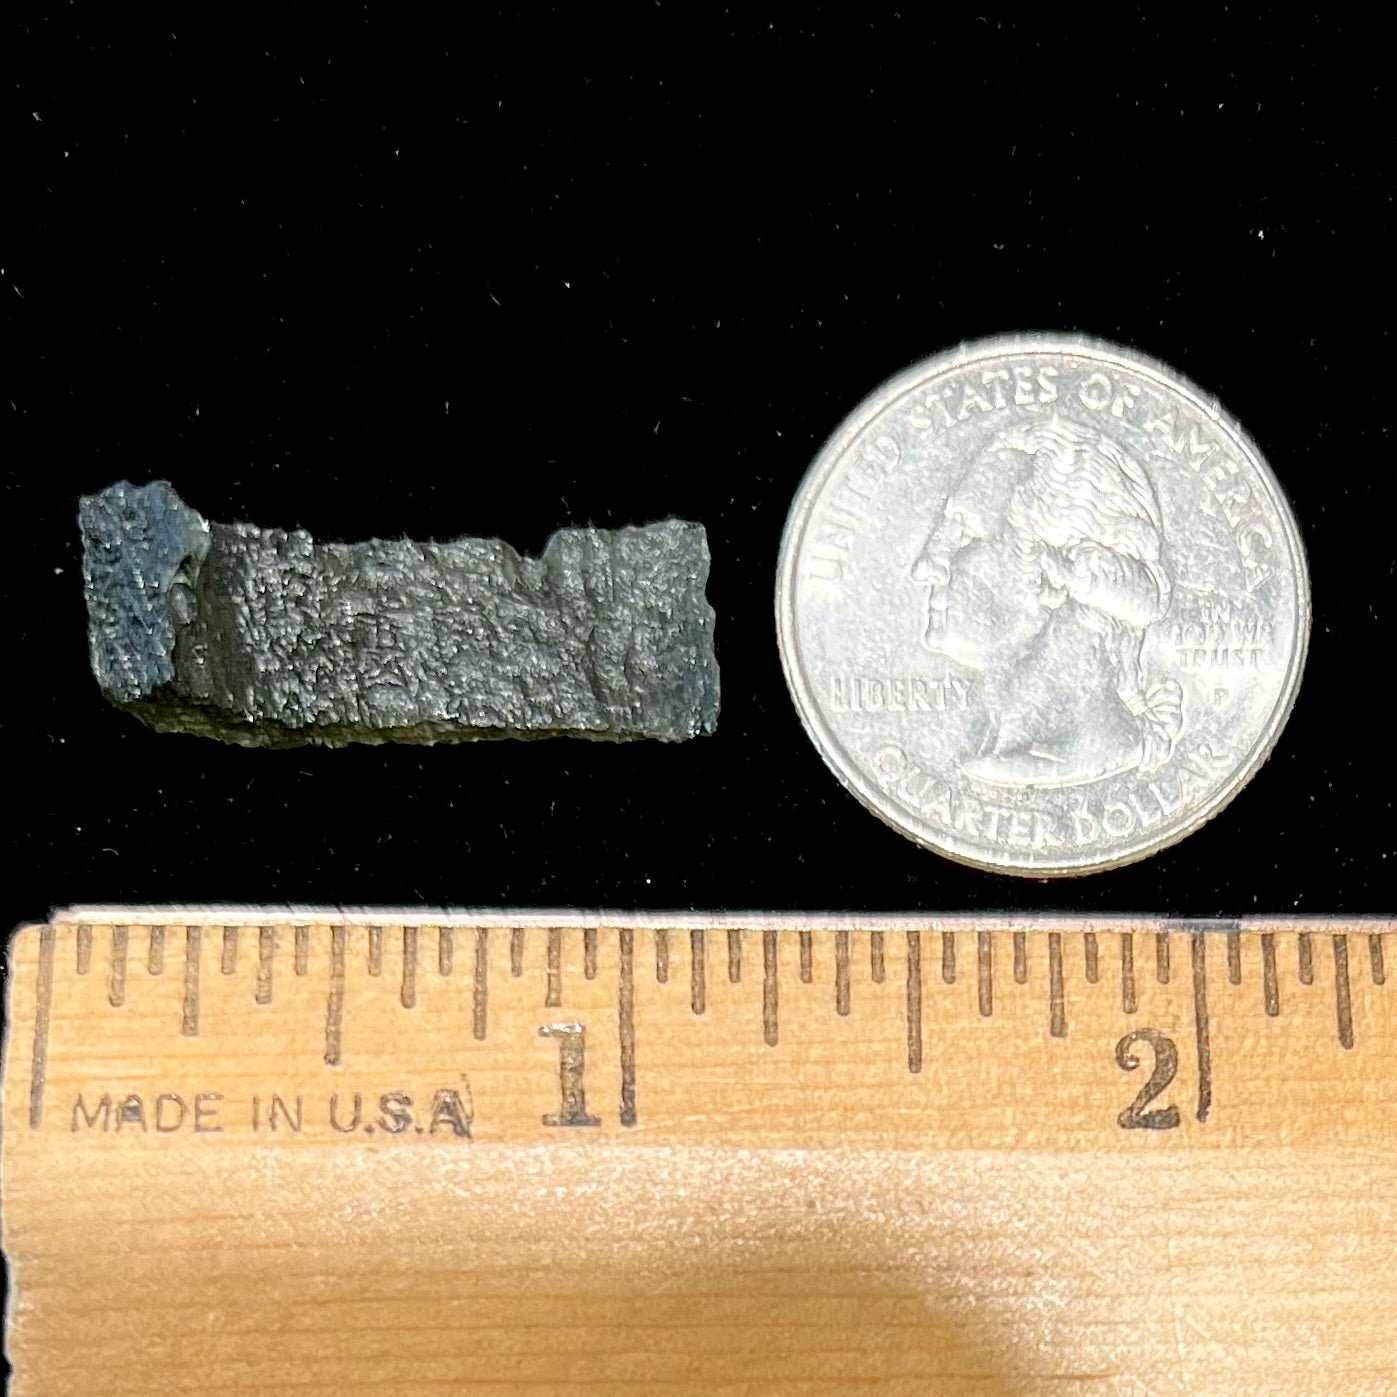 A natural, rough moldavite crystal.  The stone is shaped like the Nike Swoosh logo.